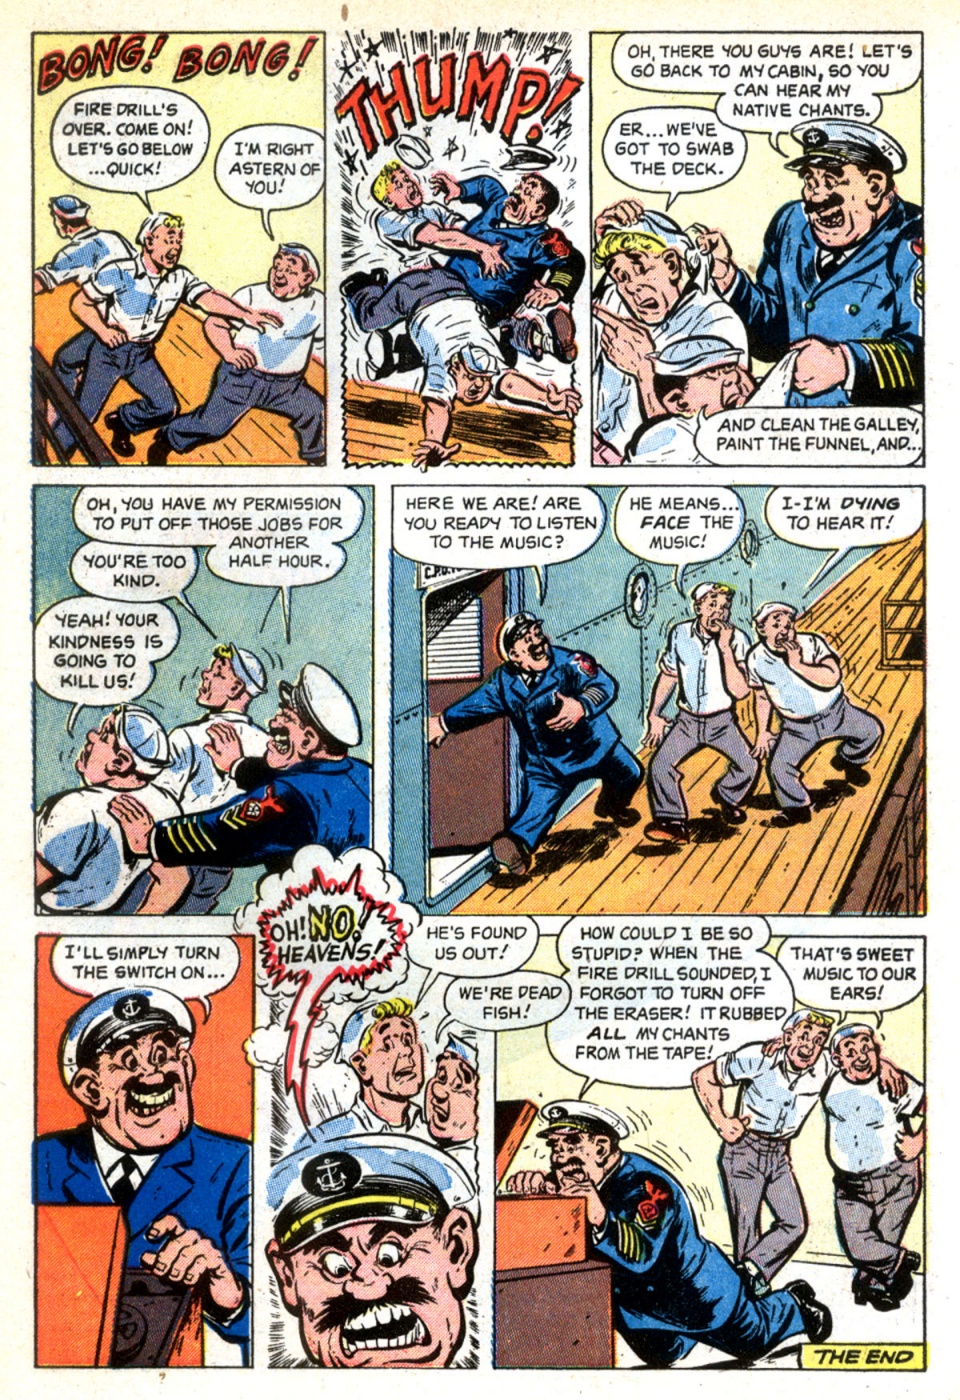 Anchors the Salt Water Daffy - Comics (b) (33)